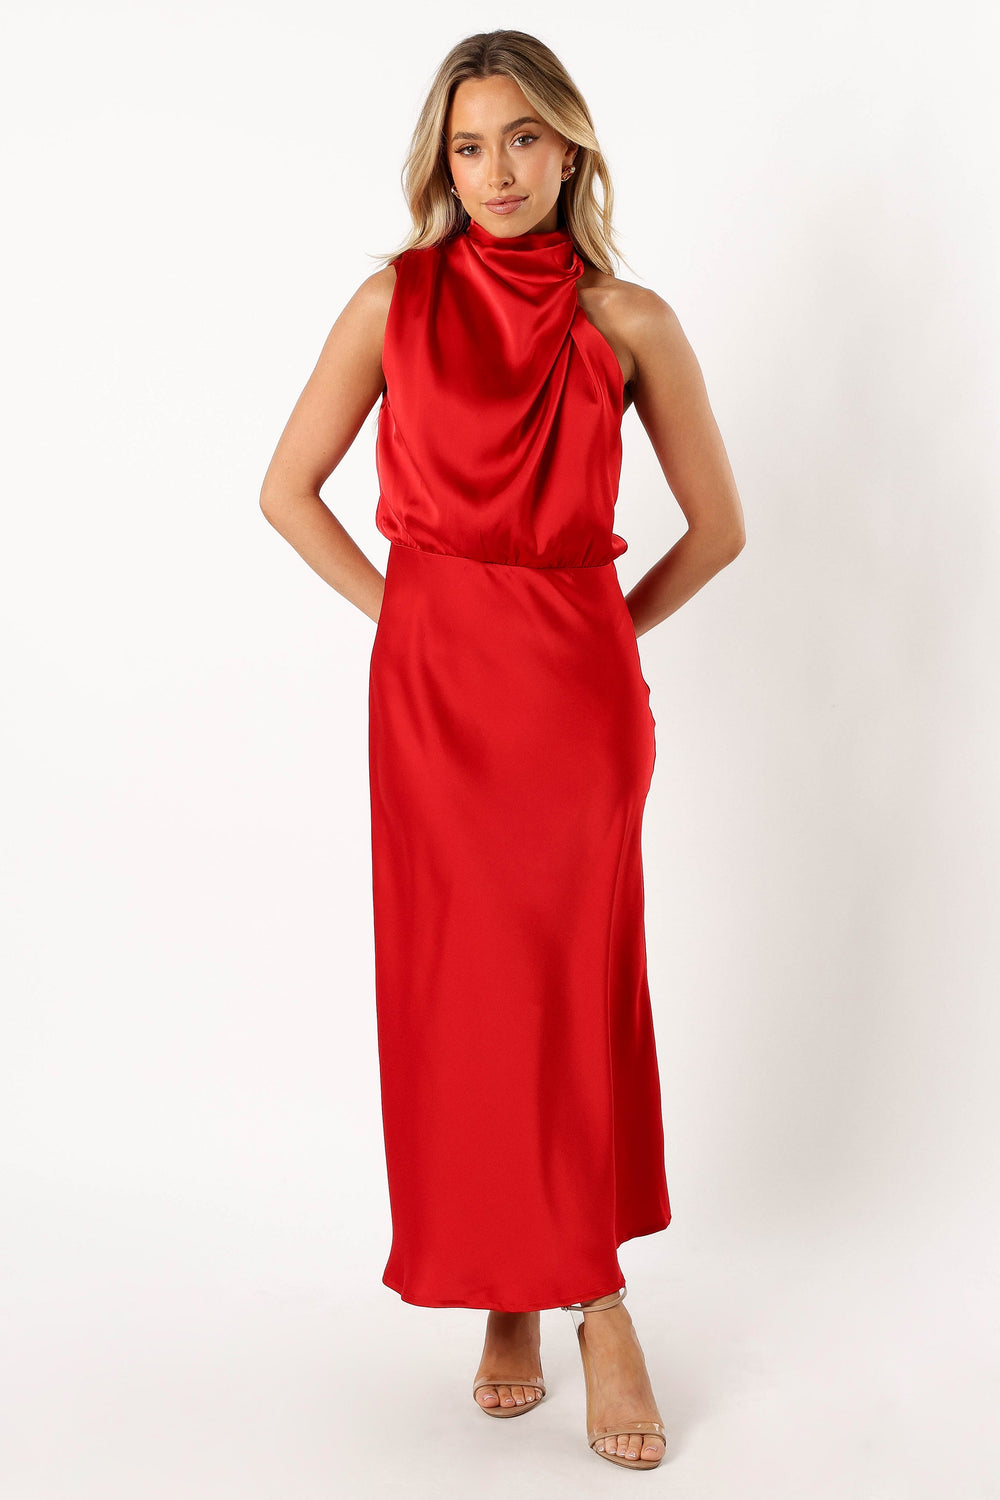 Shop Formal Dress - Anabelle Halter Neck Midi Dress - Red fifth image